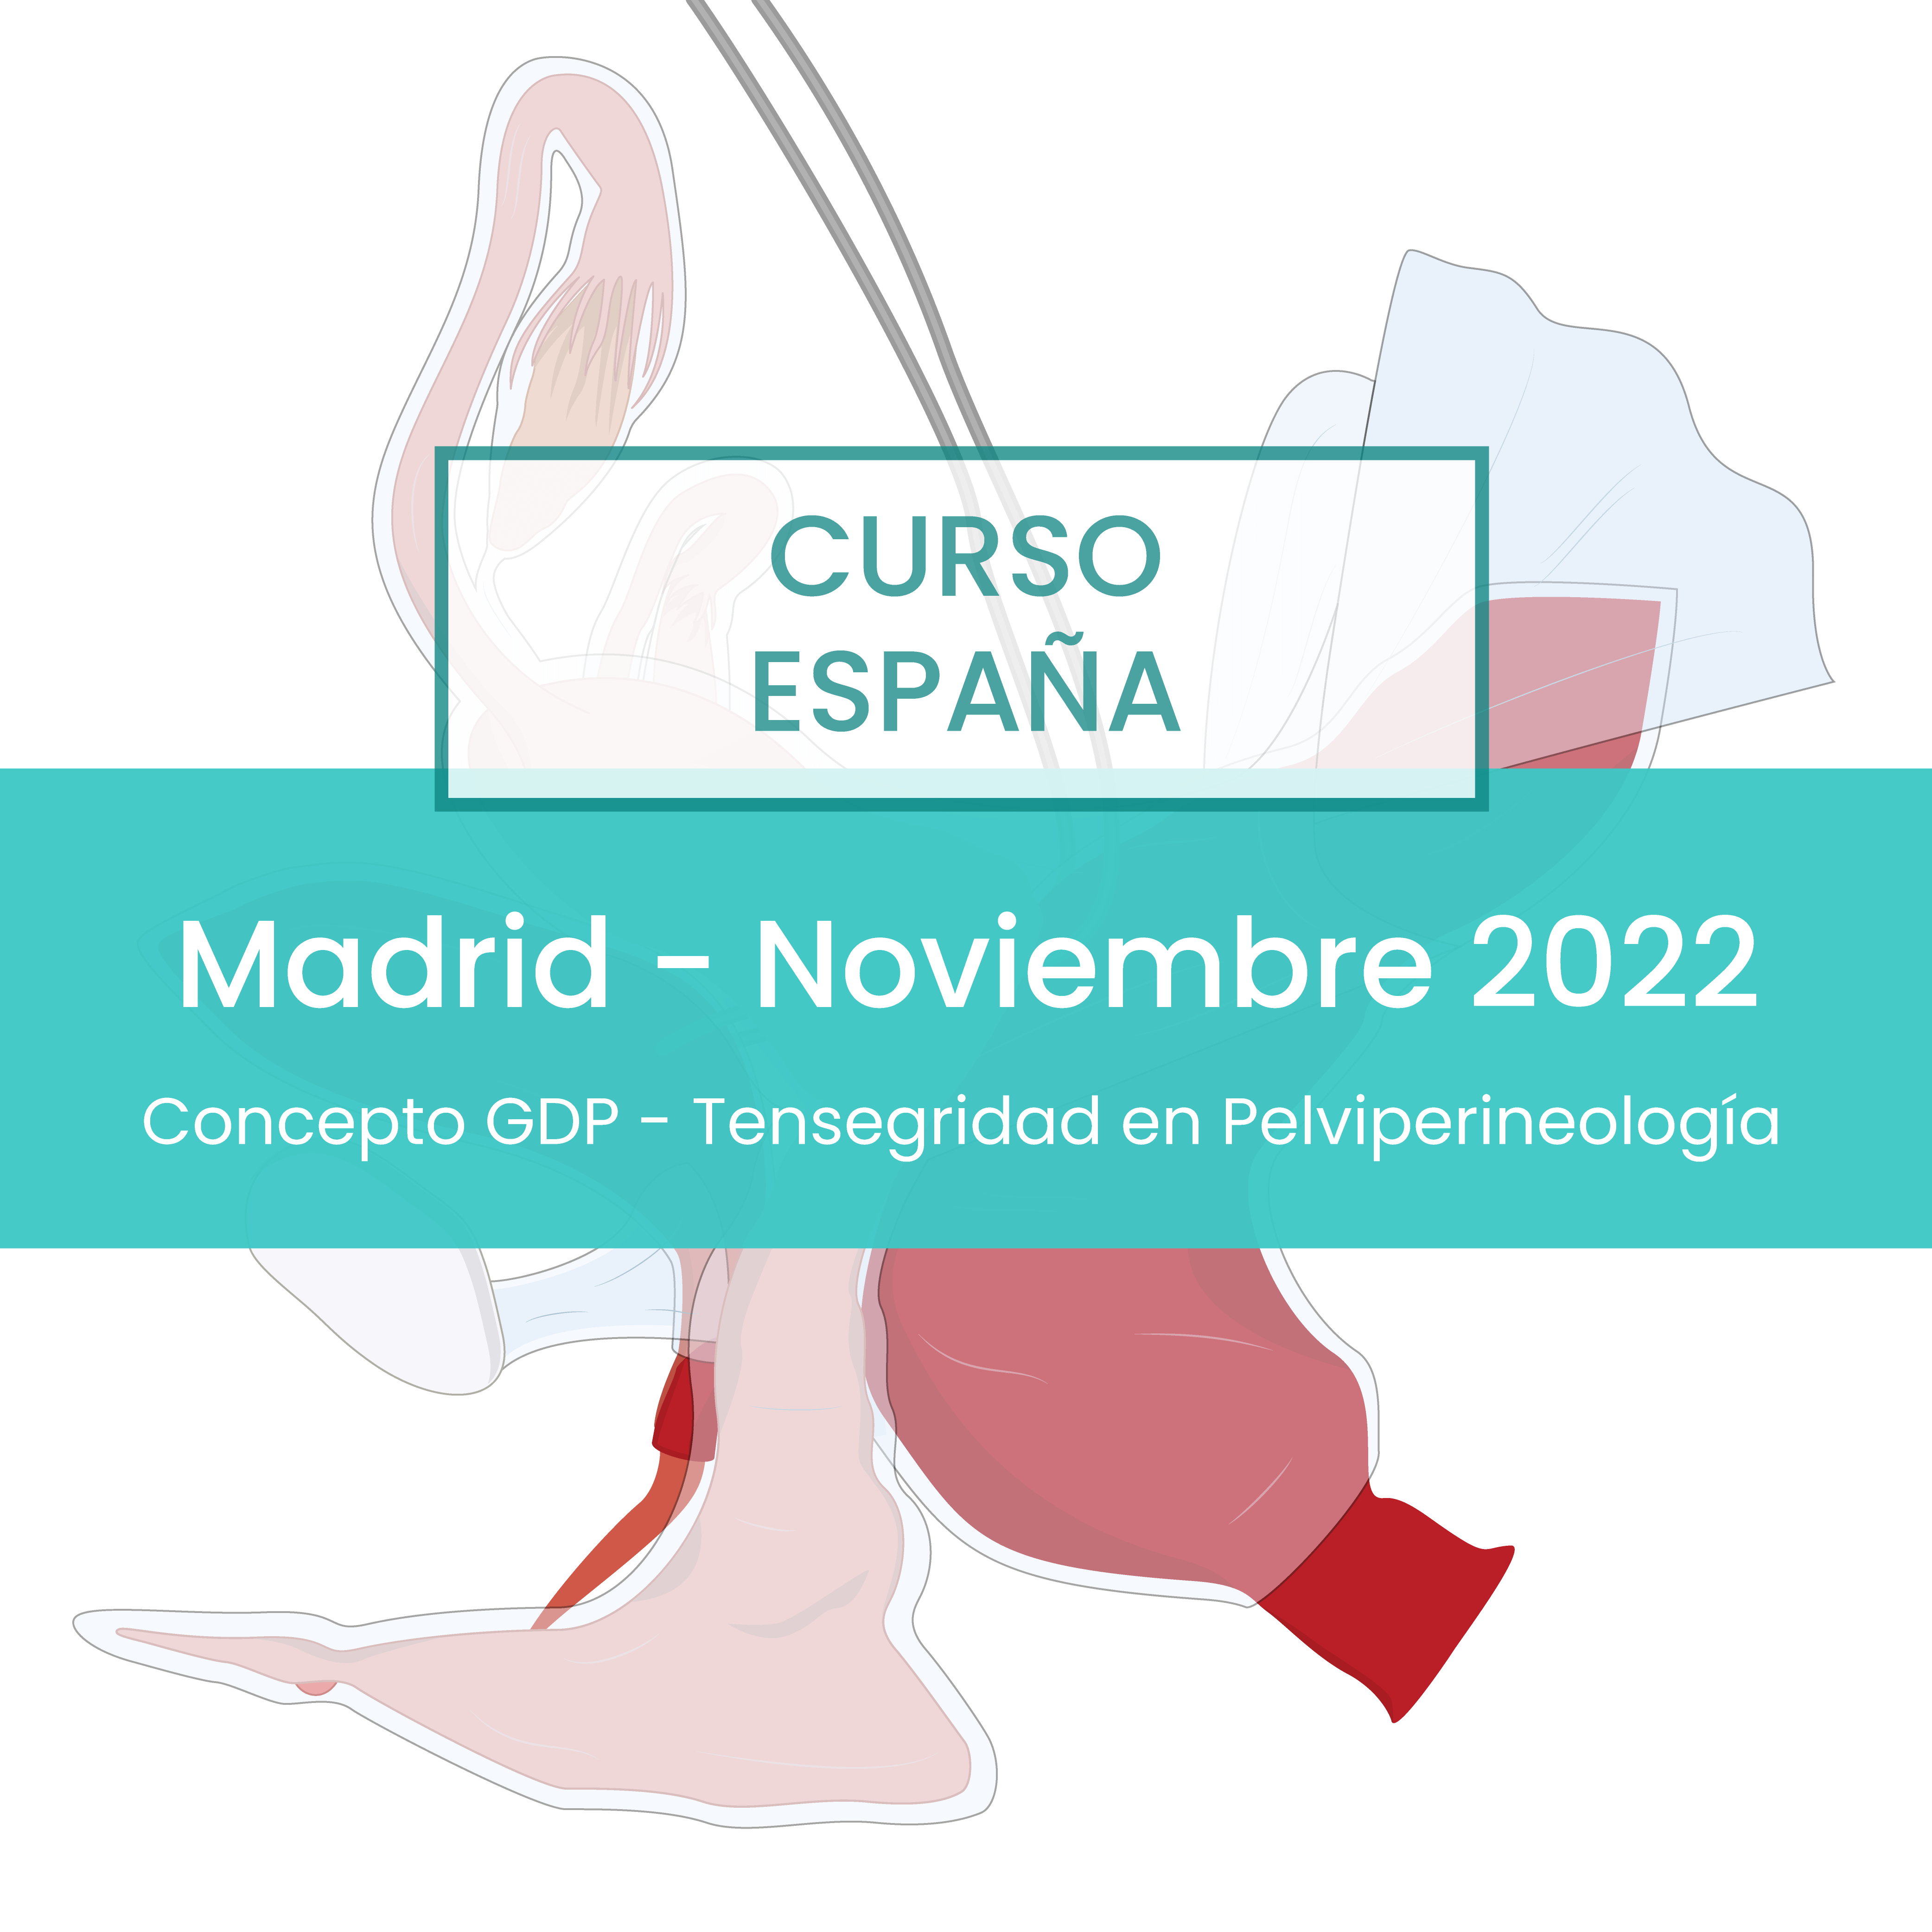 Madrid - Noviembre 2022